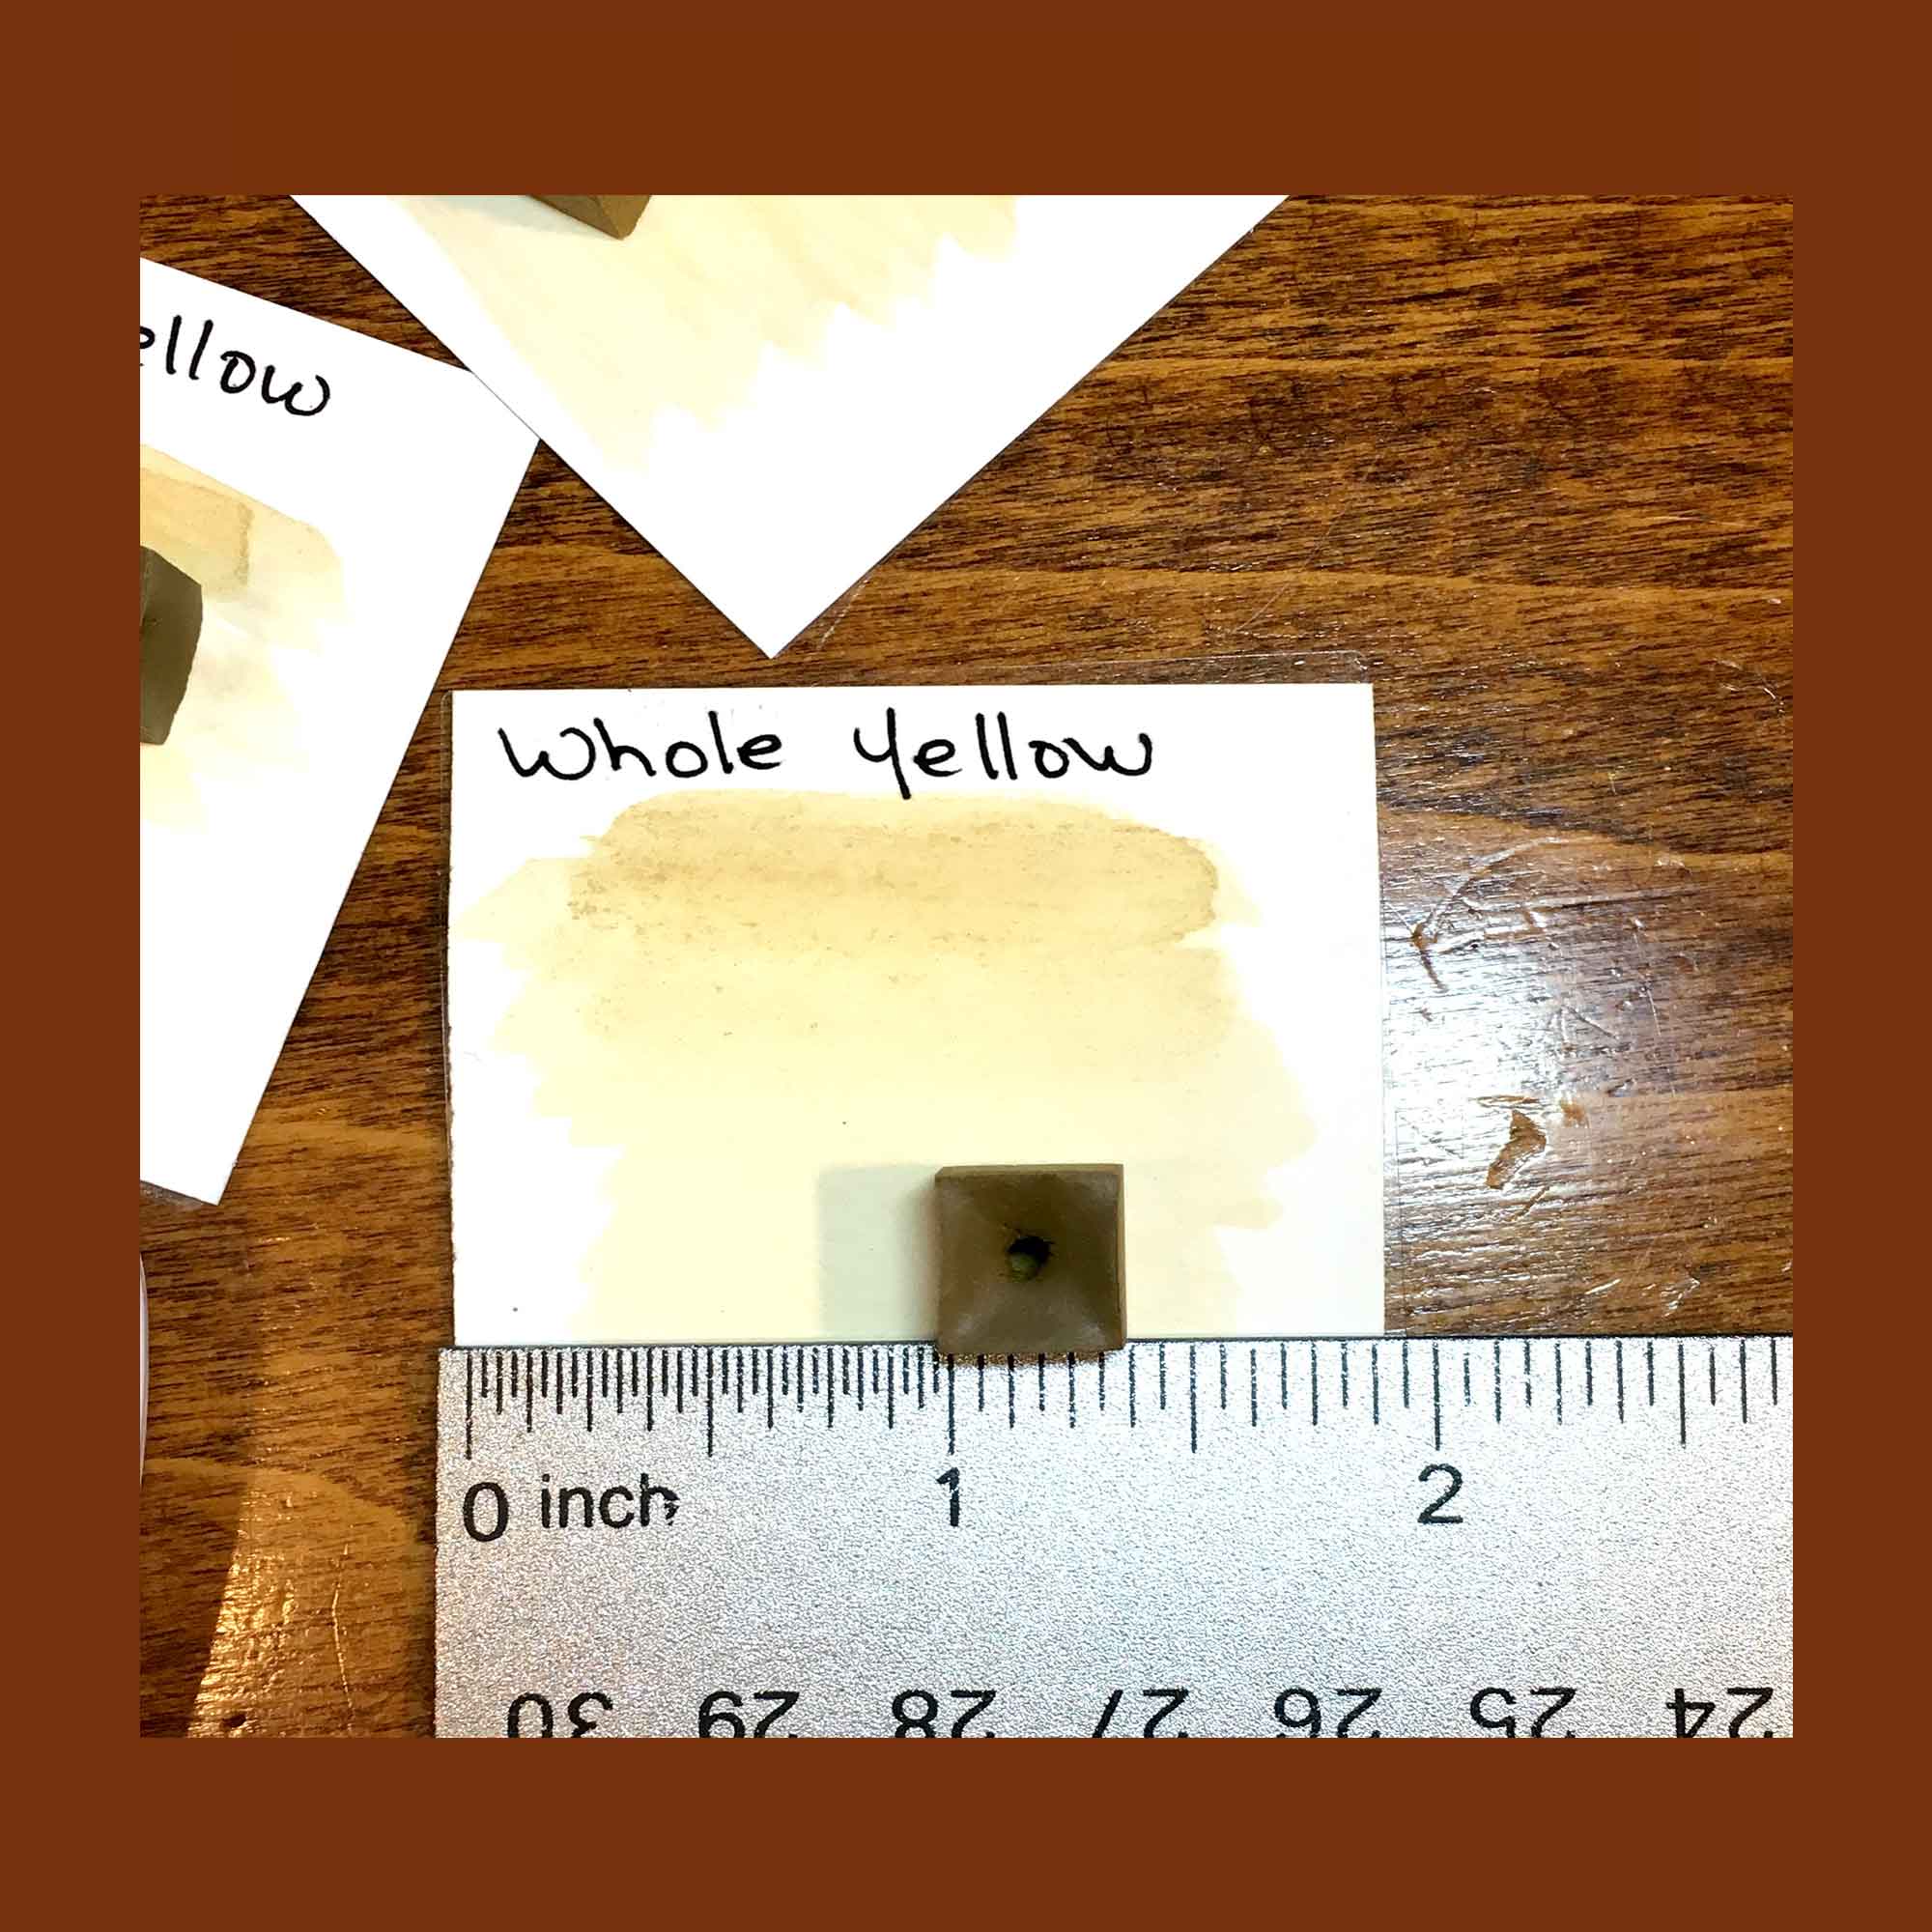 Paleo Paint Mini Cubes are approximately 3/8".